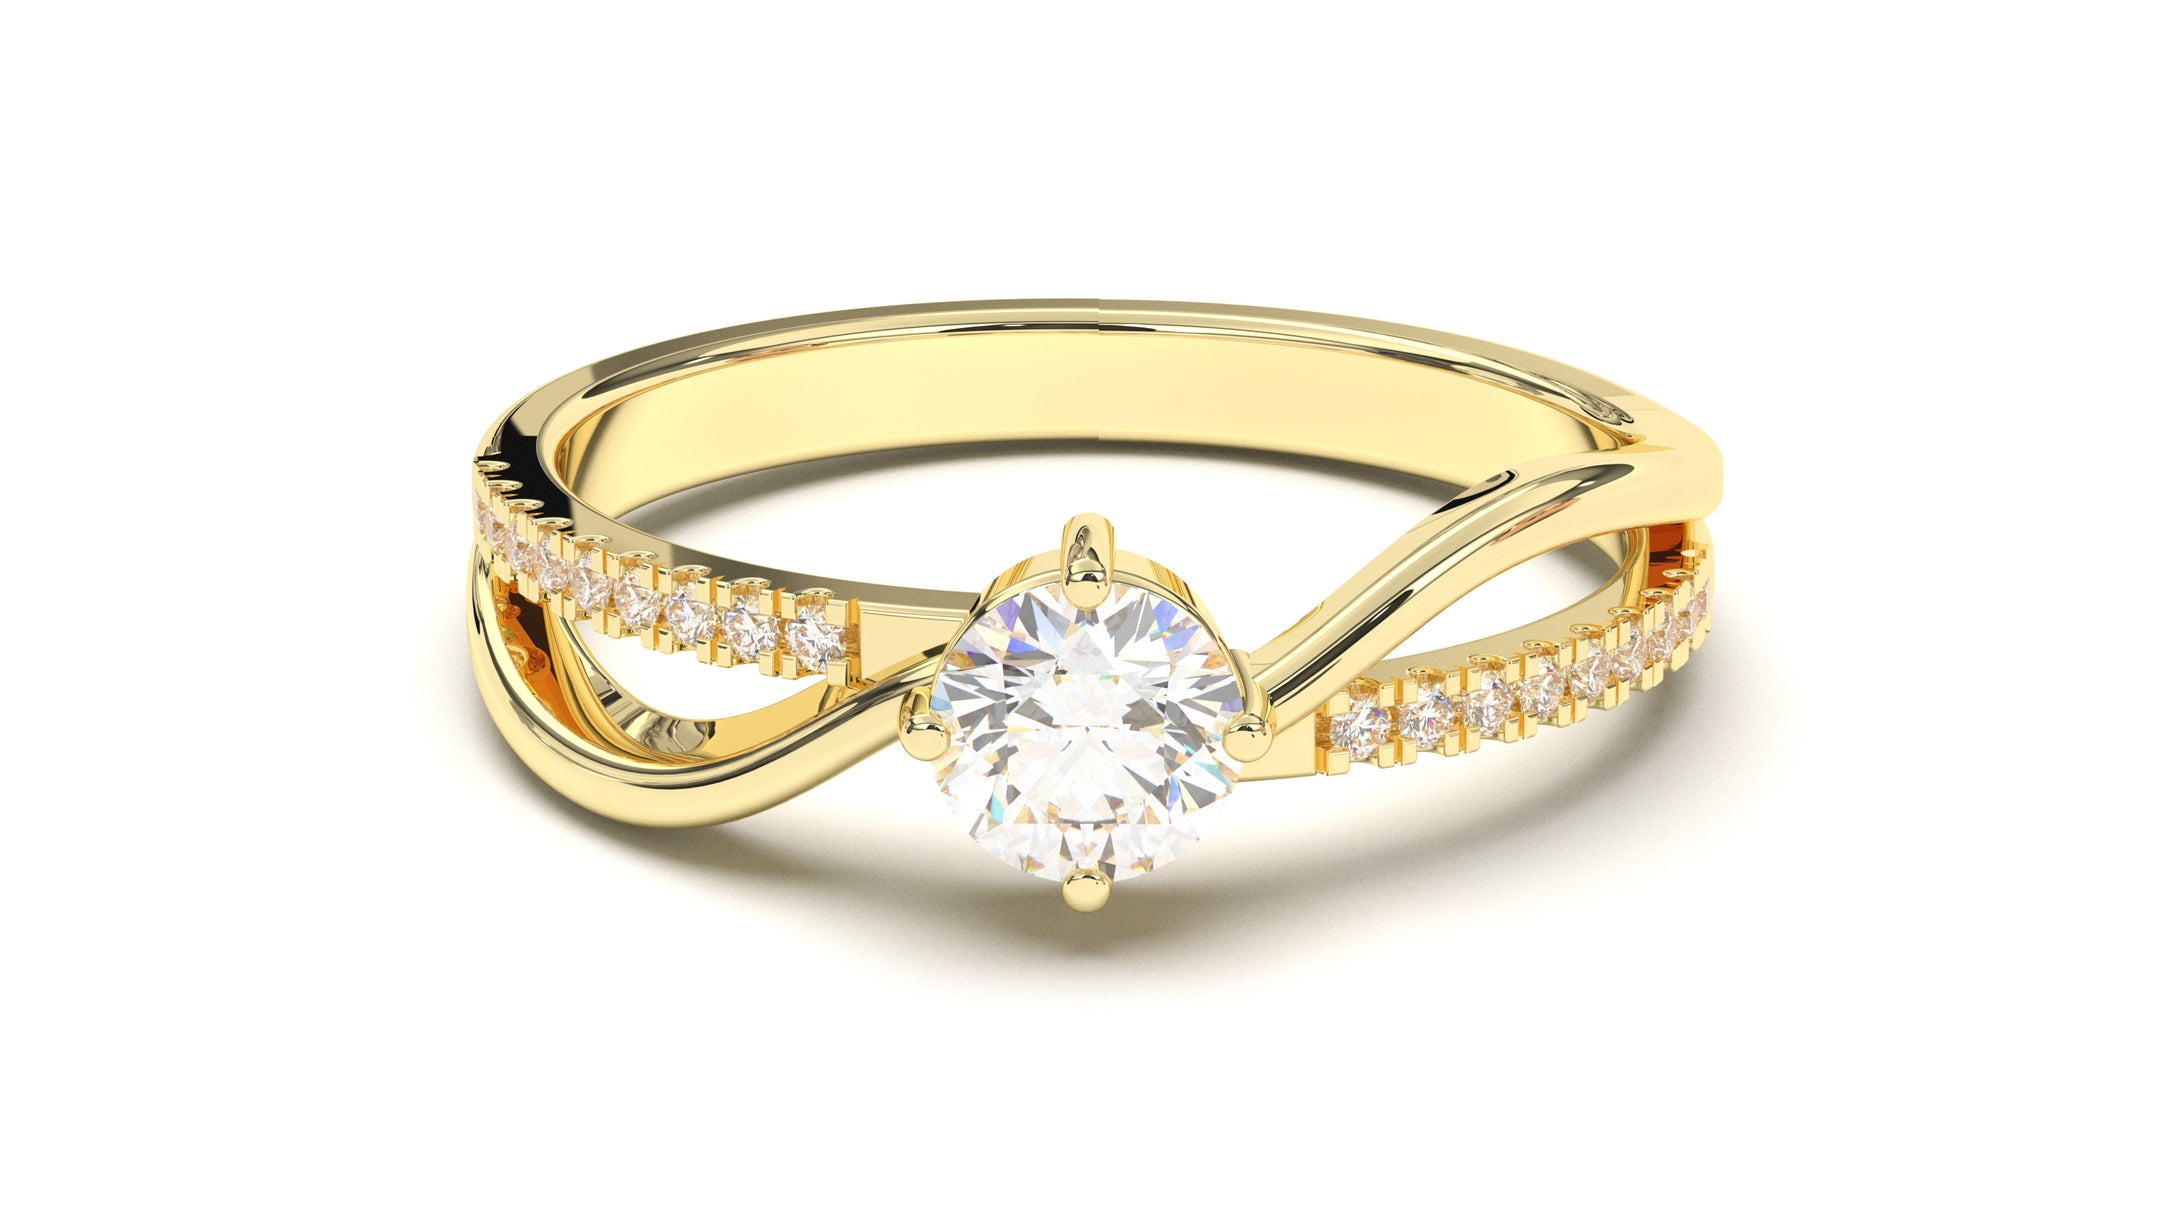 Engagement Ring with a Center Round White Diamond and Round White Diamond Side Stones | Fête Matrimony XXII